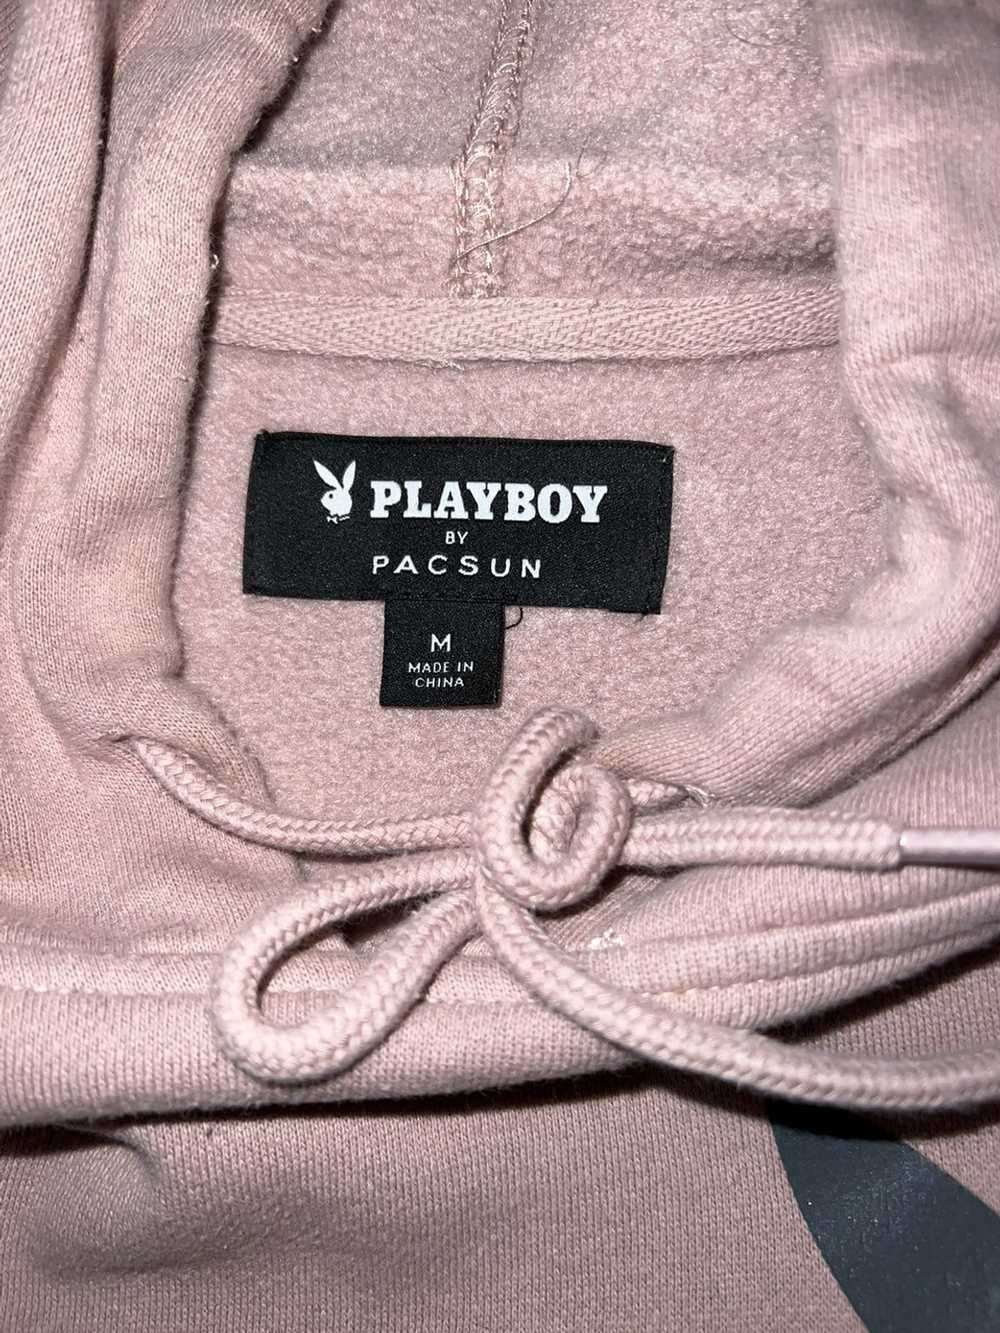 Pacsun × Playboy Playboy hoodie - image 2